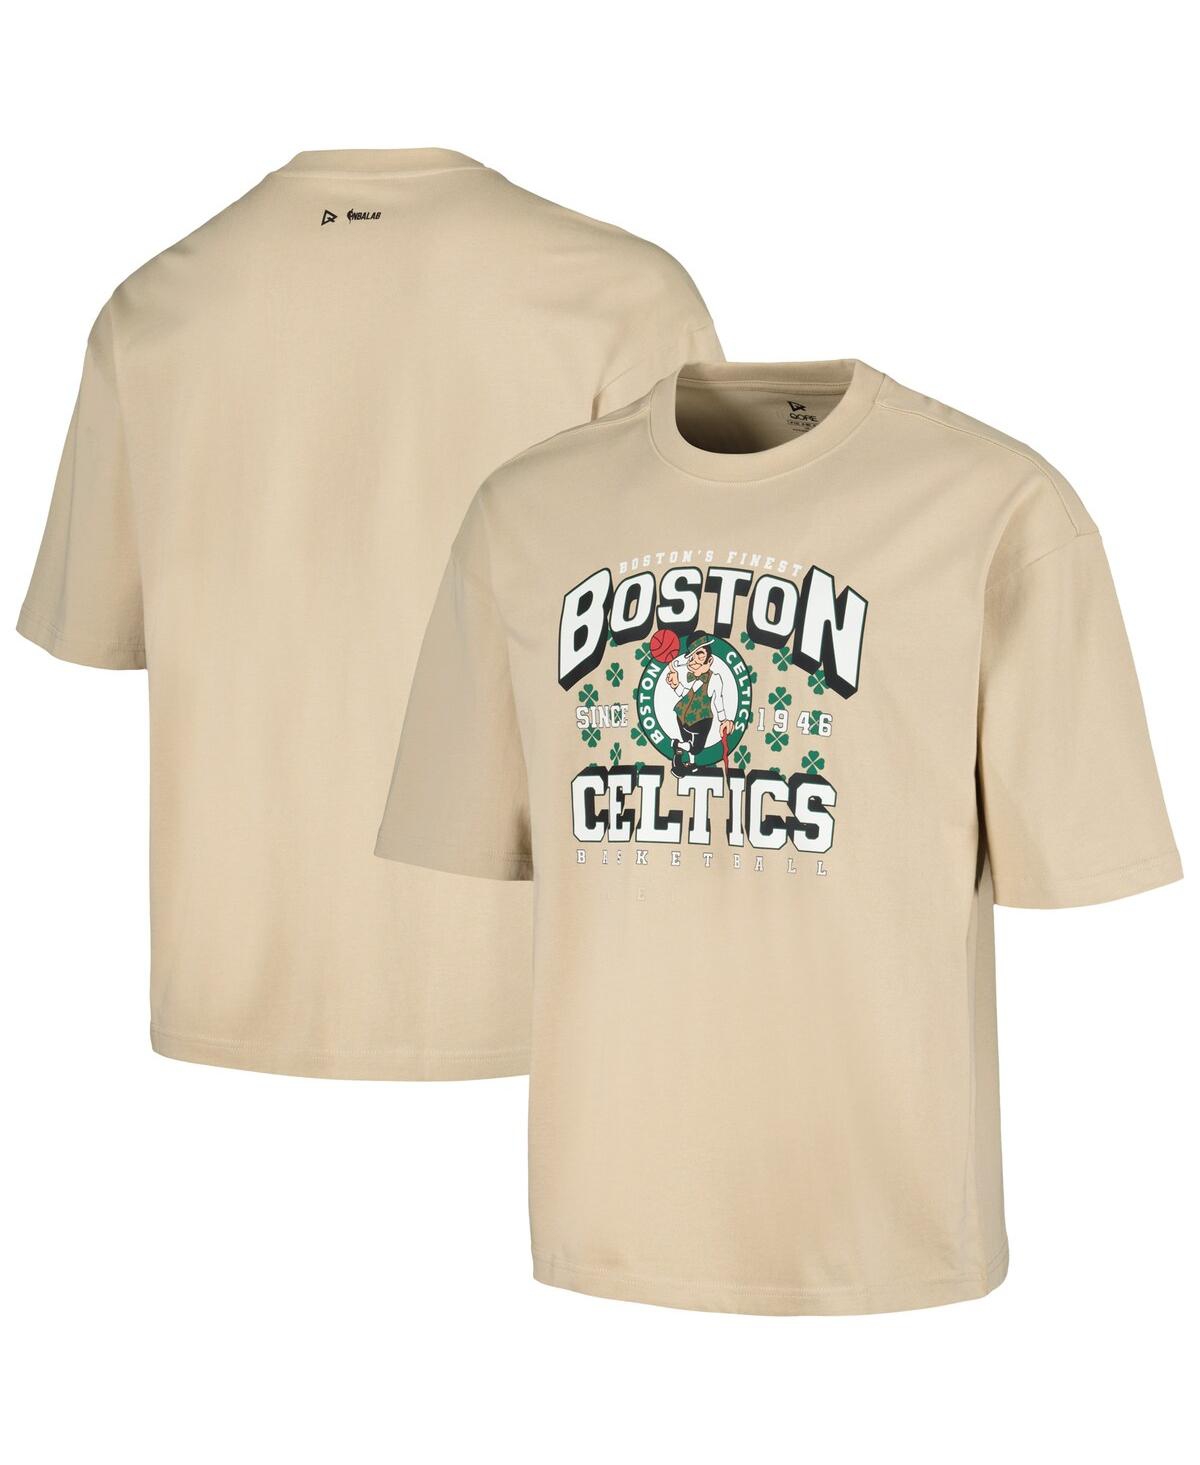 Men's and Women's Qore Cream Boston Celtics Oversized Gameday Cozy T-shirt - Cream